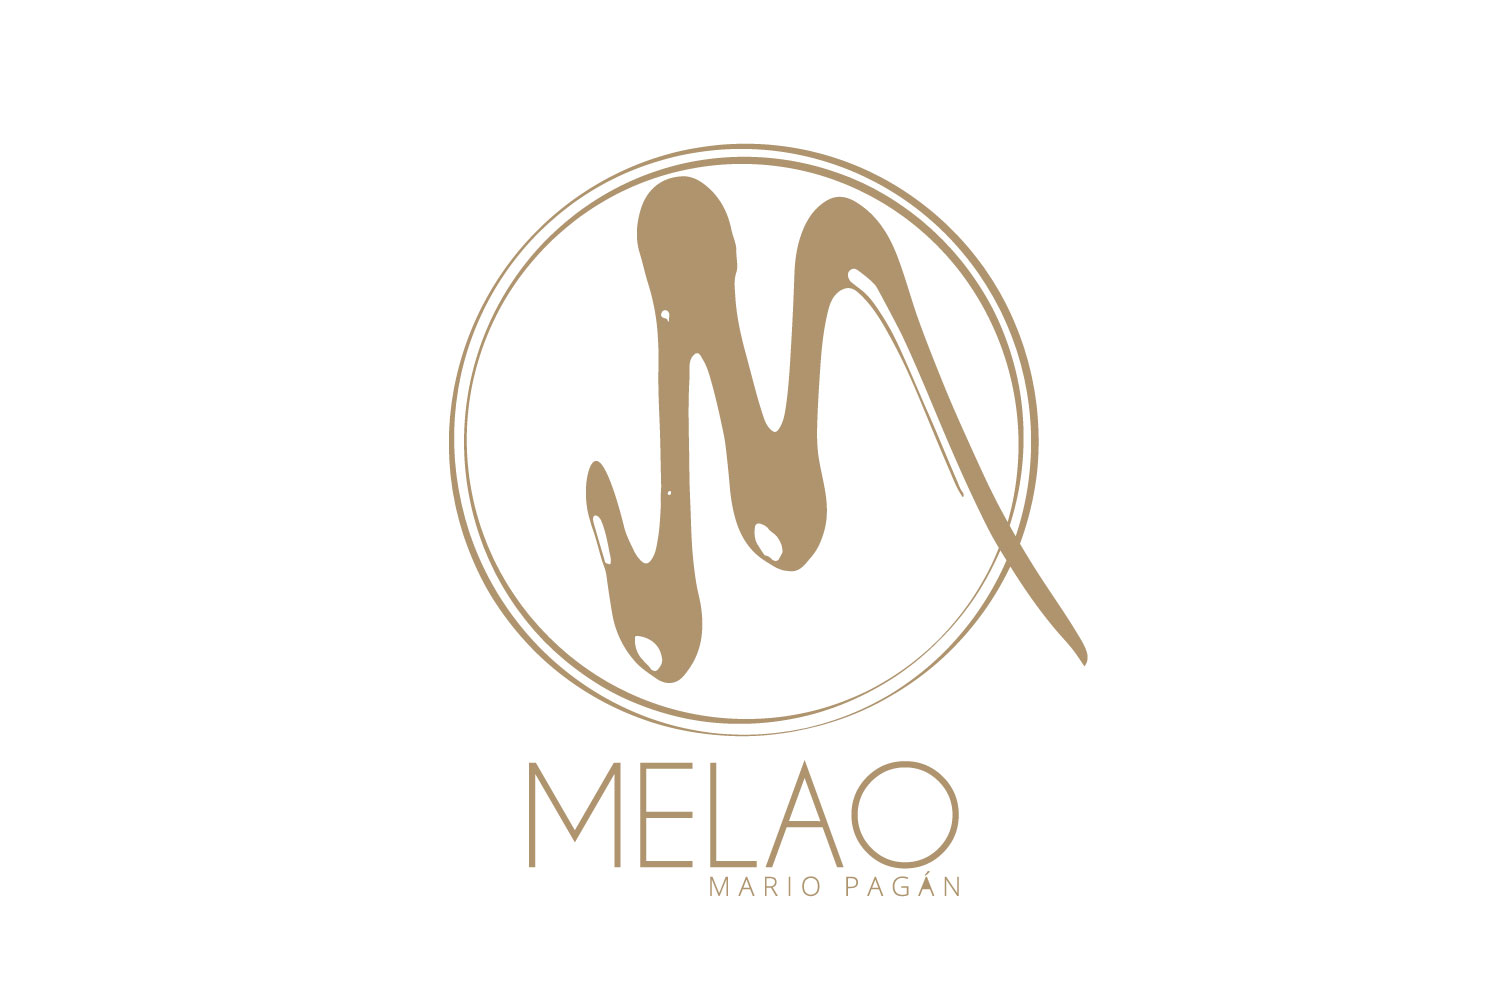 Melao by Mario Pagan - PRISA Group